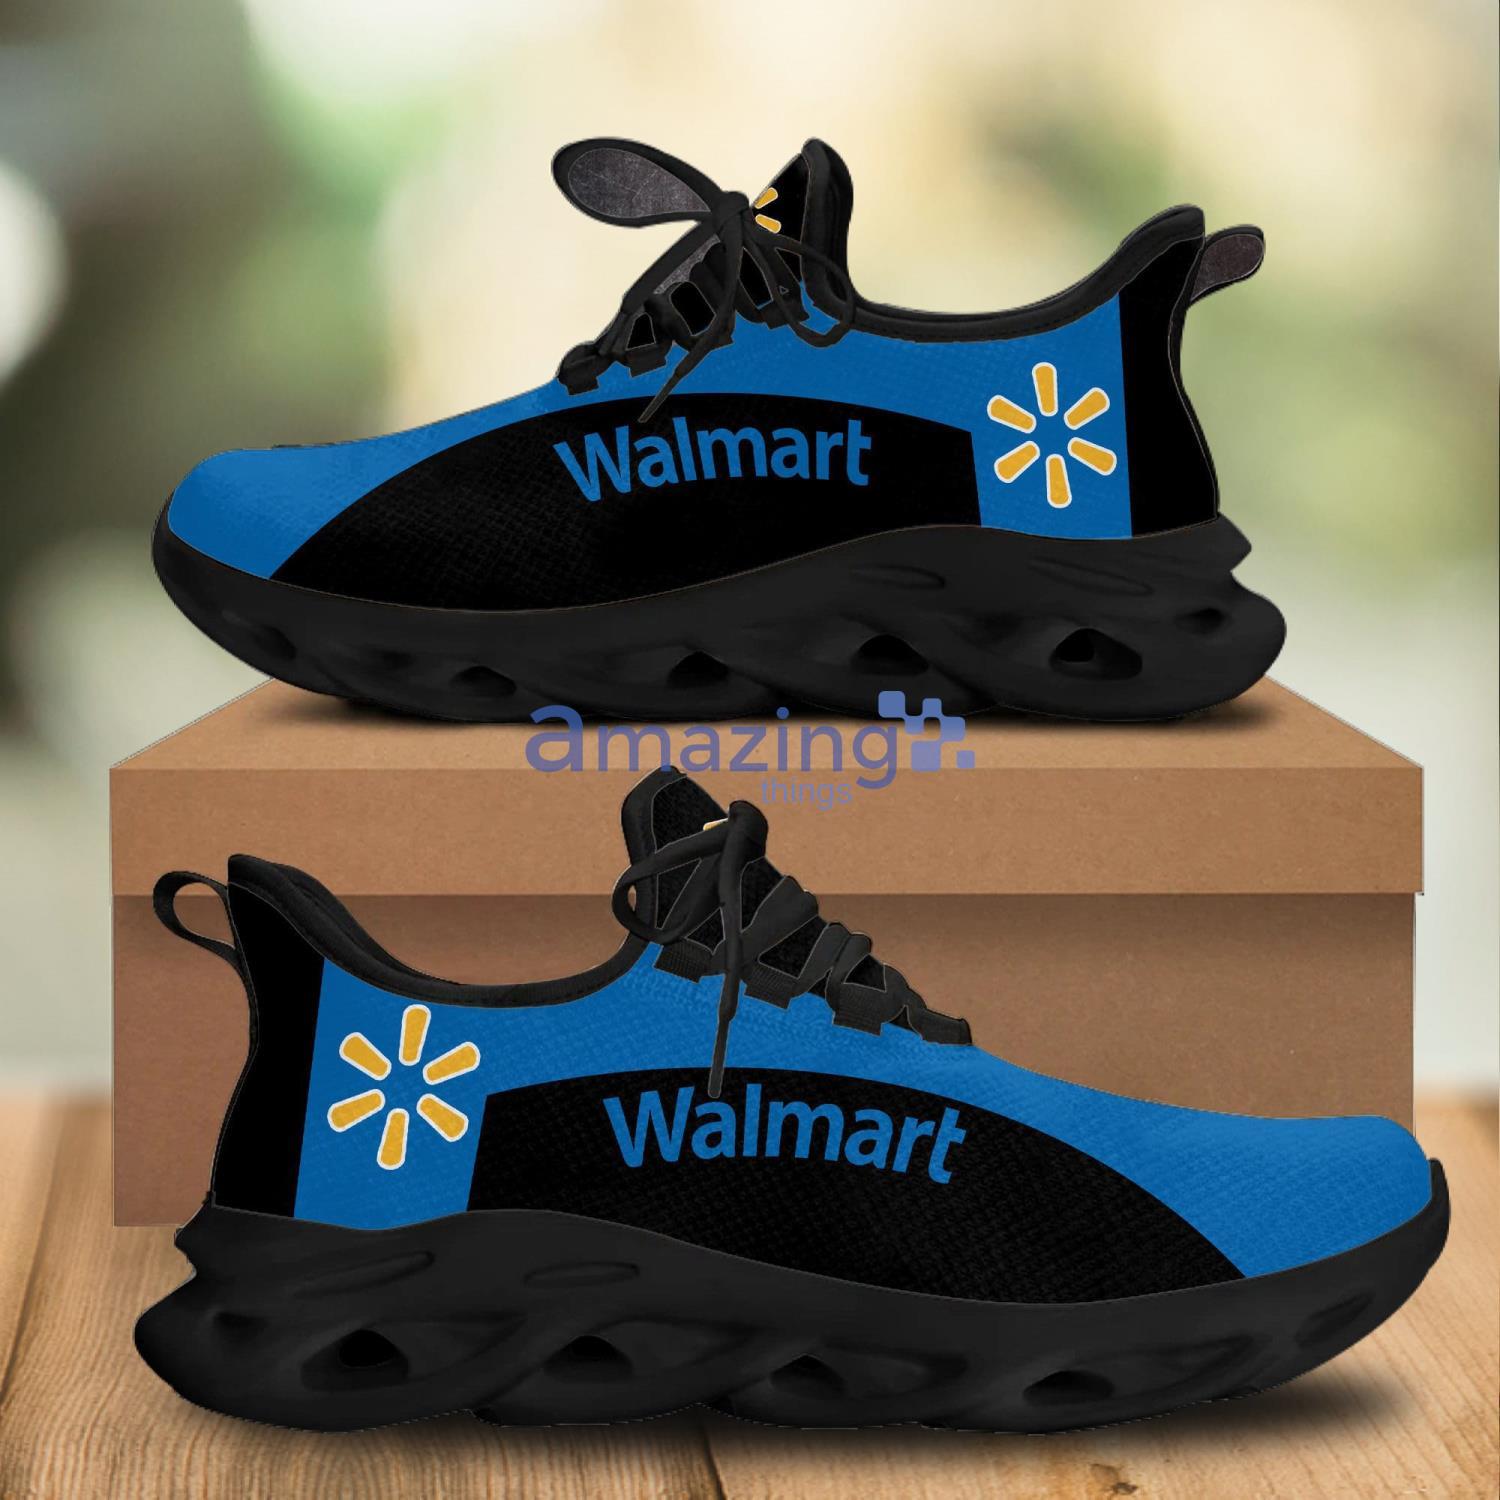 Walmart Men And Women Max Soul Shoes Running Sneakers